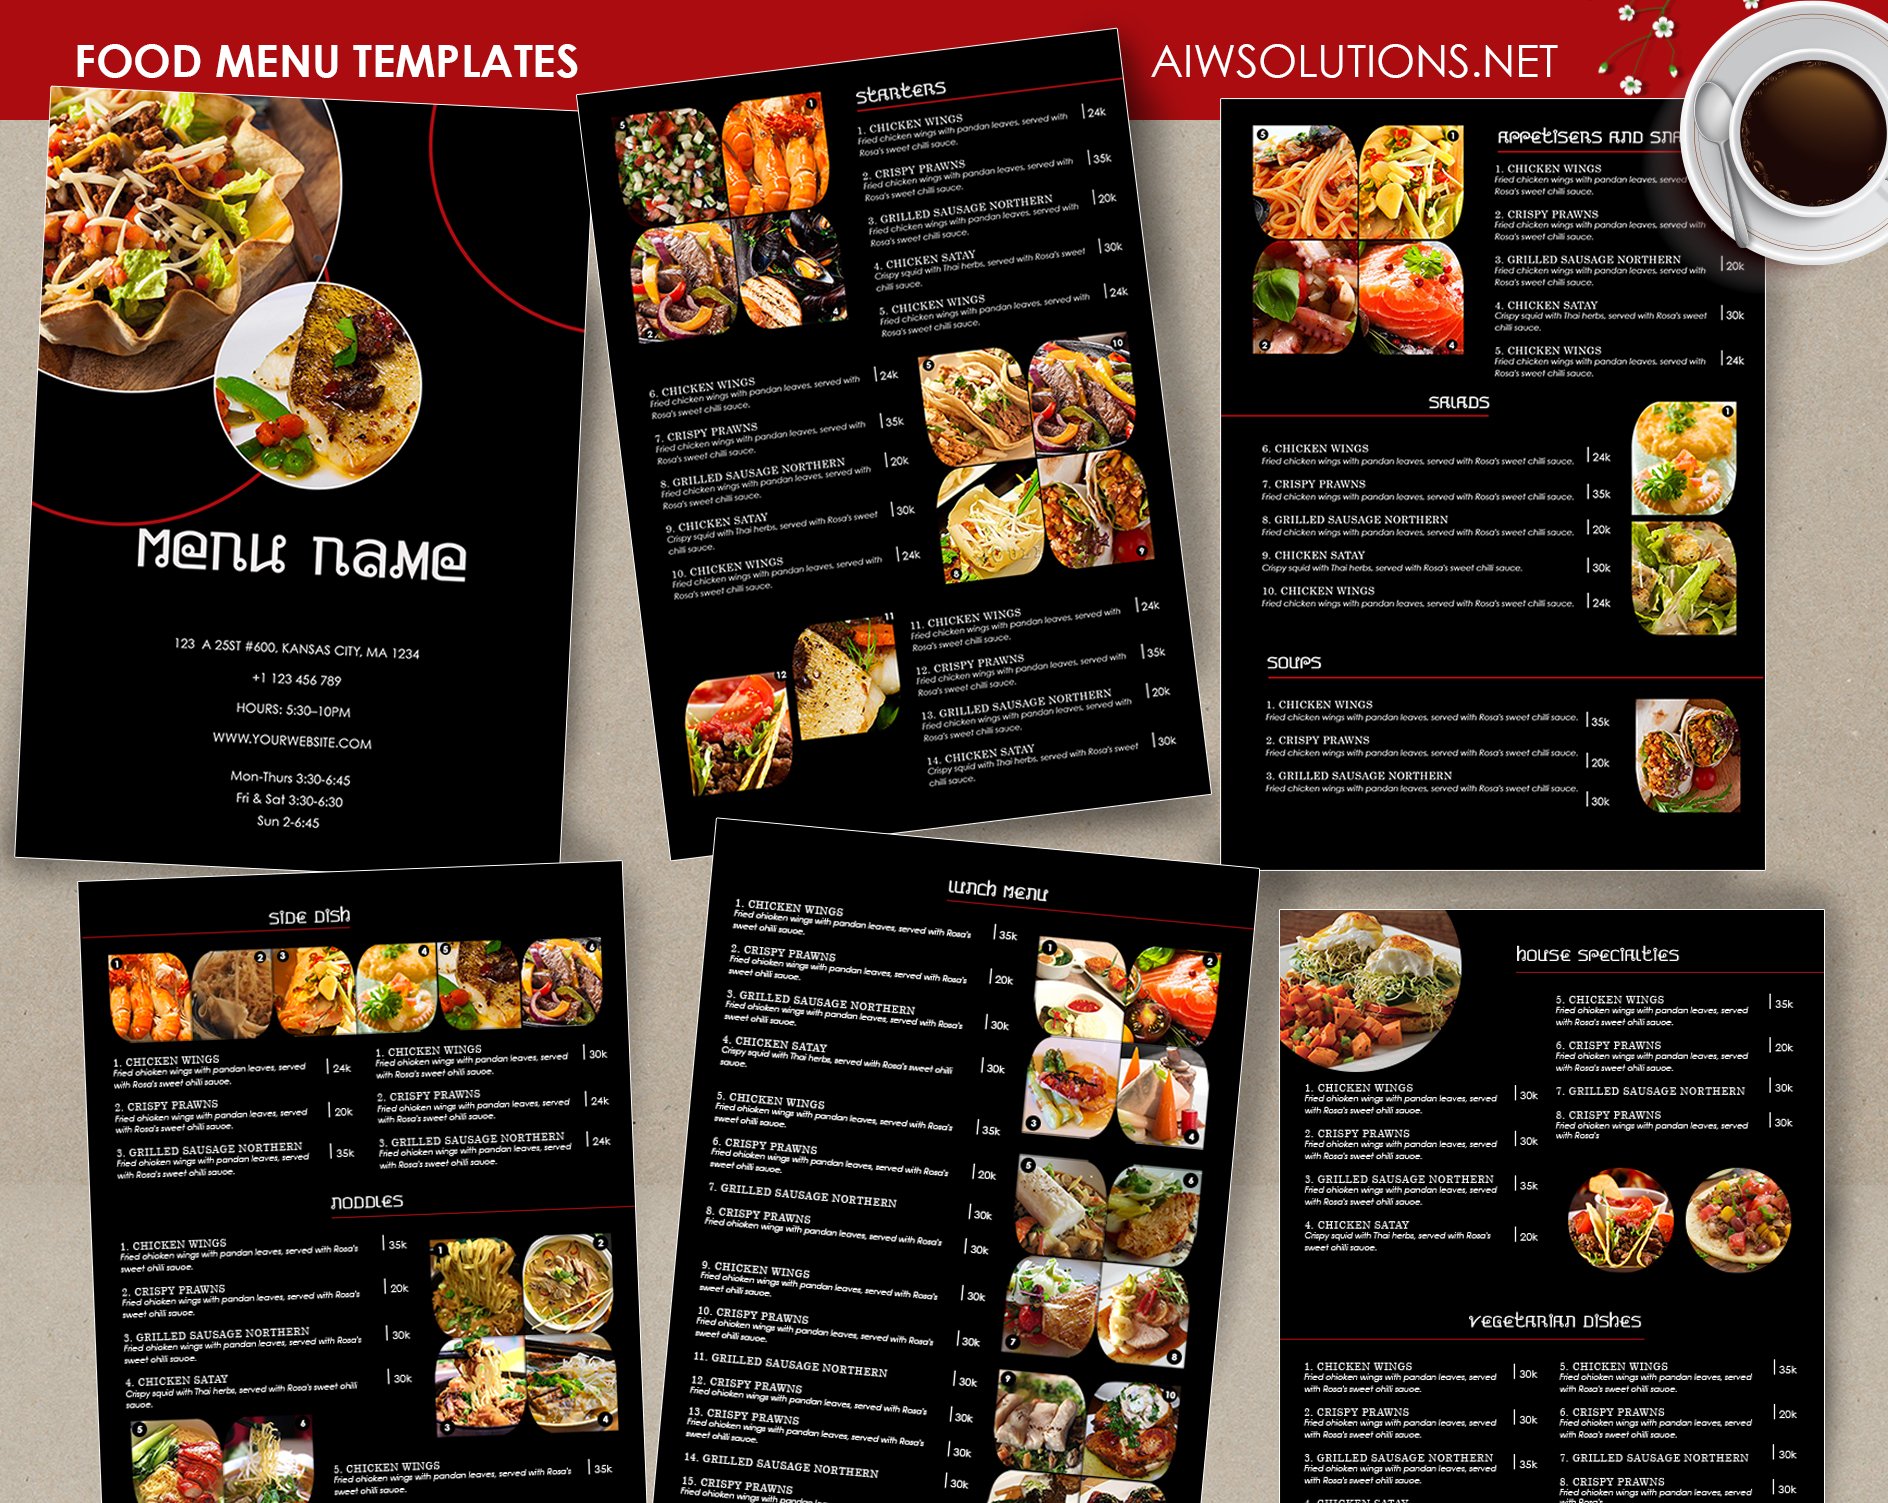 Food menu Template-id26 cover image.